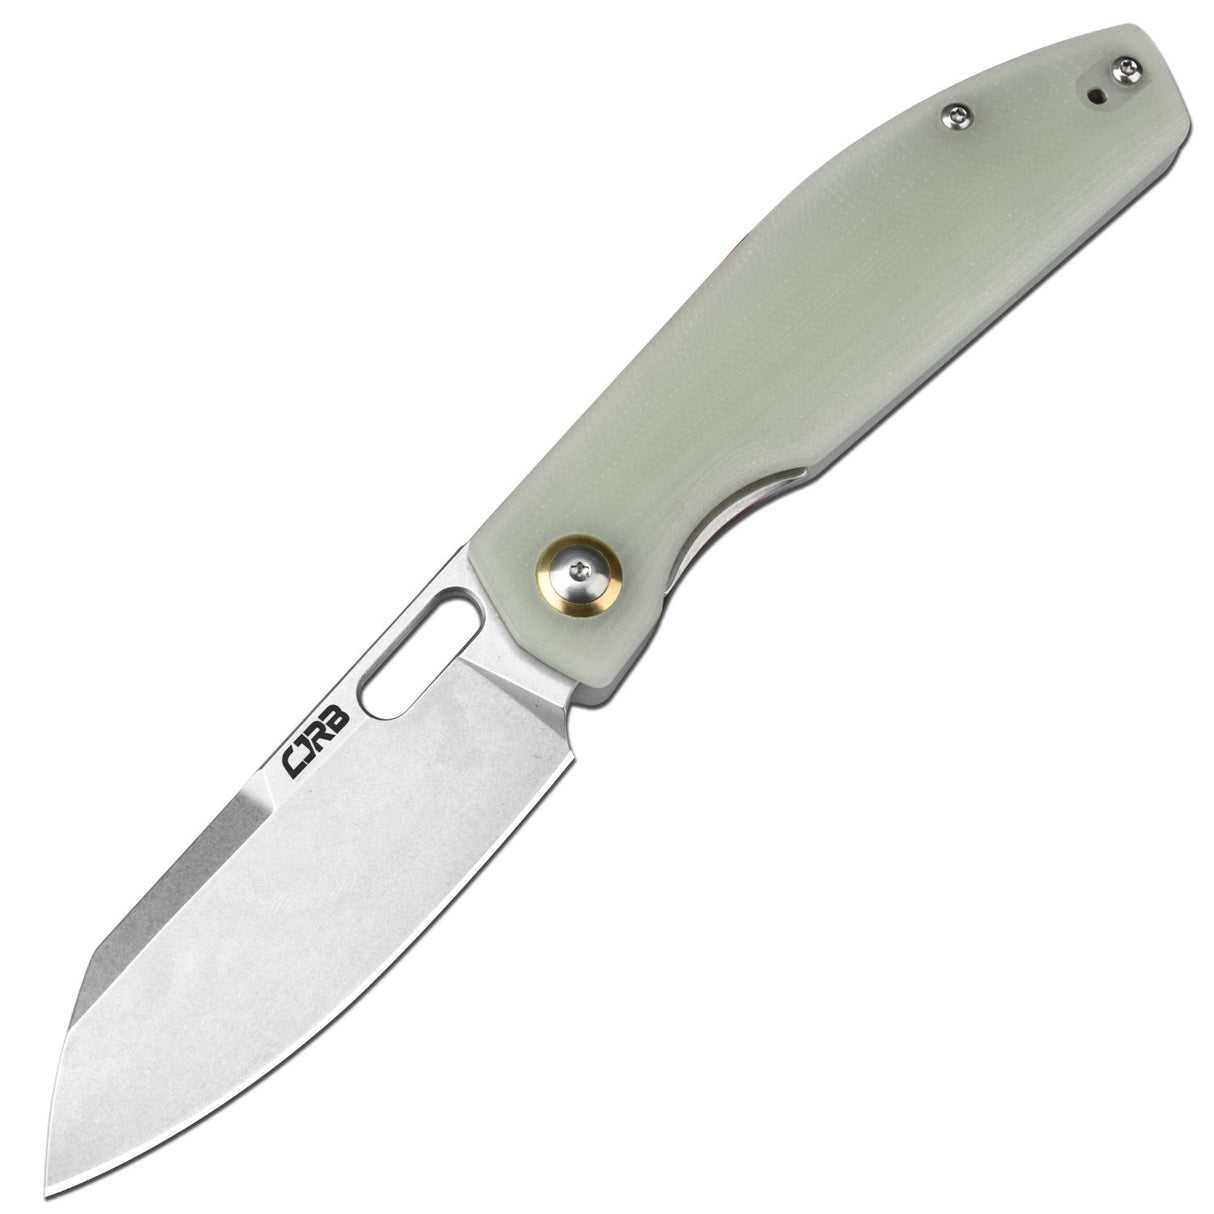 CJRB EKKO J1929 Liner Lock AR-RPM9 Steel Blade G10 and Micarta Handle Folding Knives